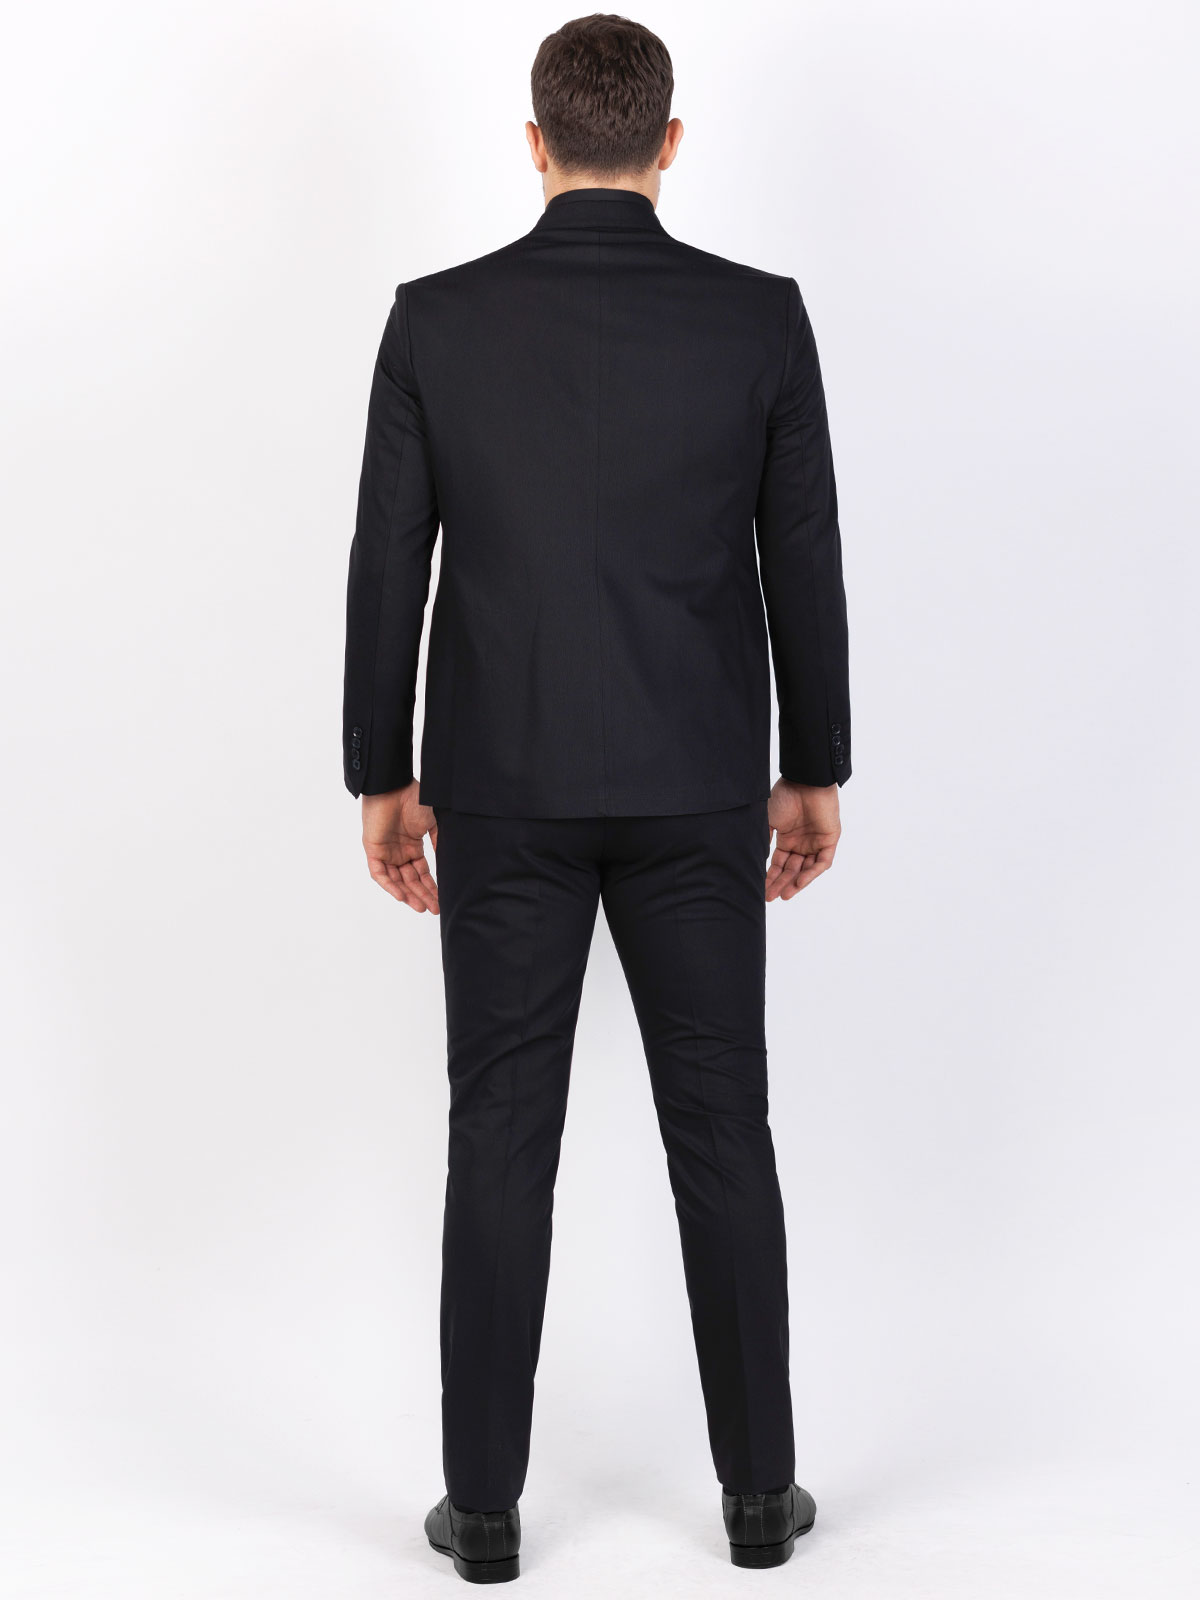 Threepiece black relief suit - 68061 € 241.84 img4